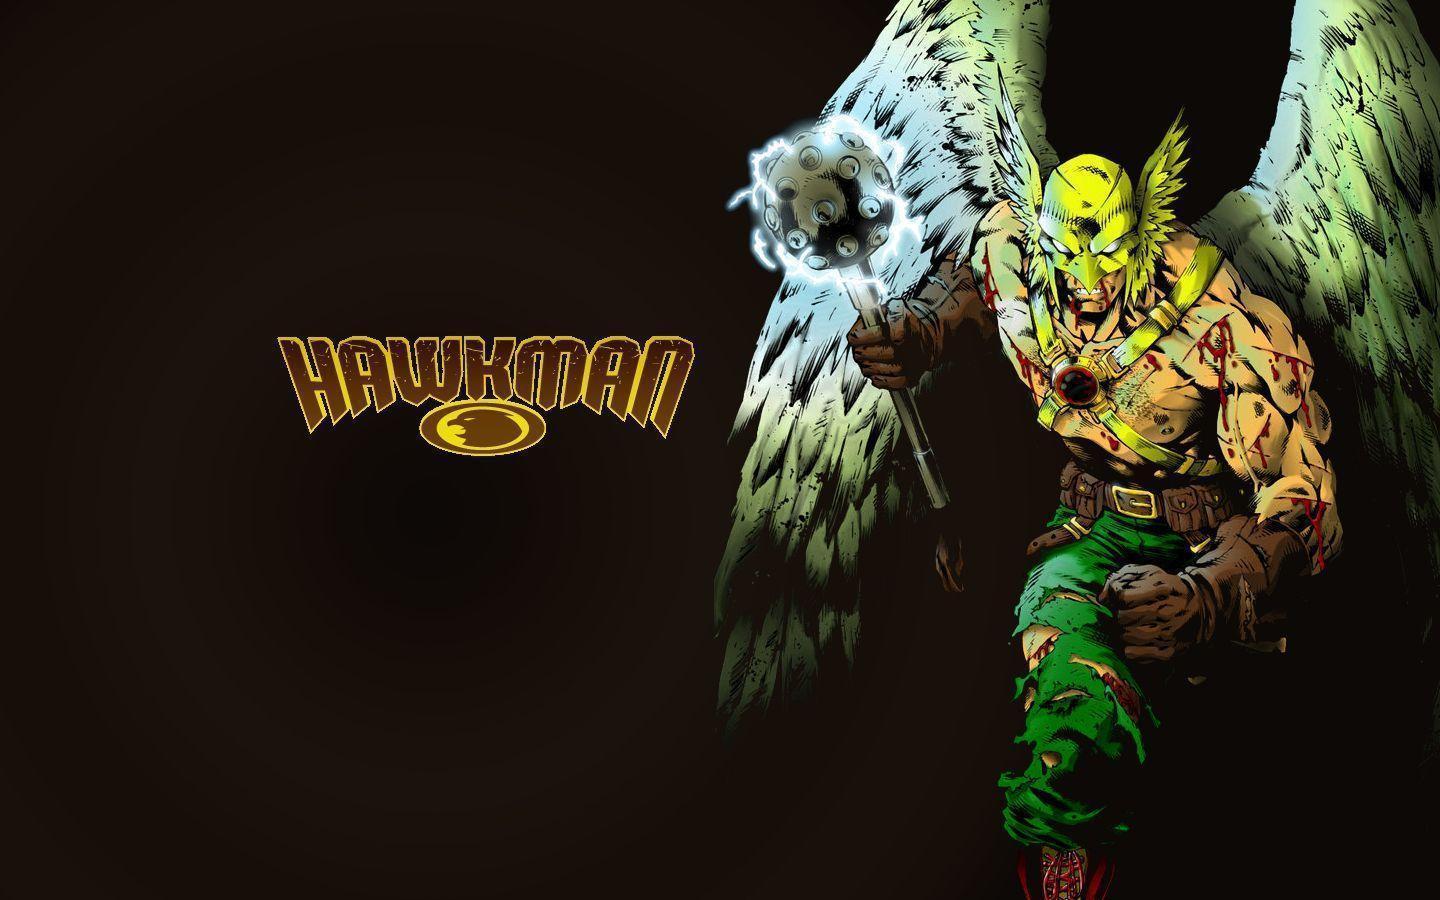 Hawkman is